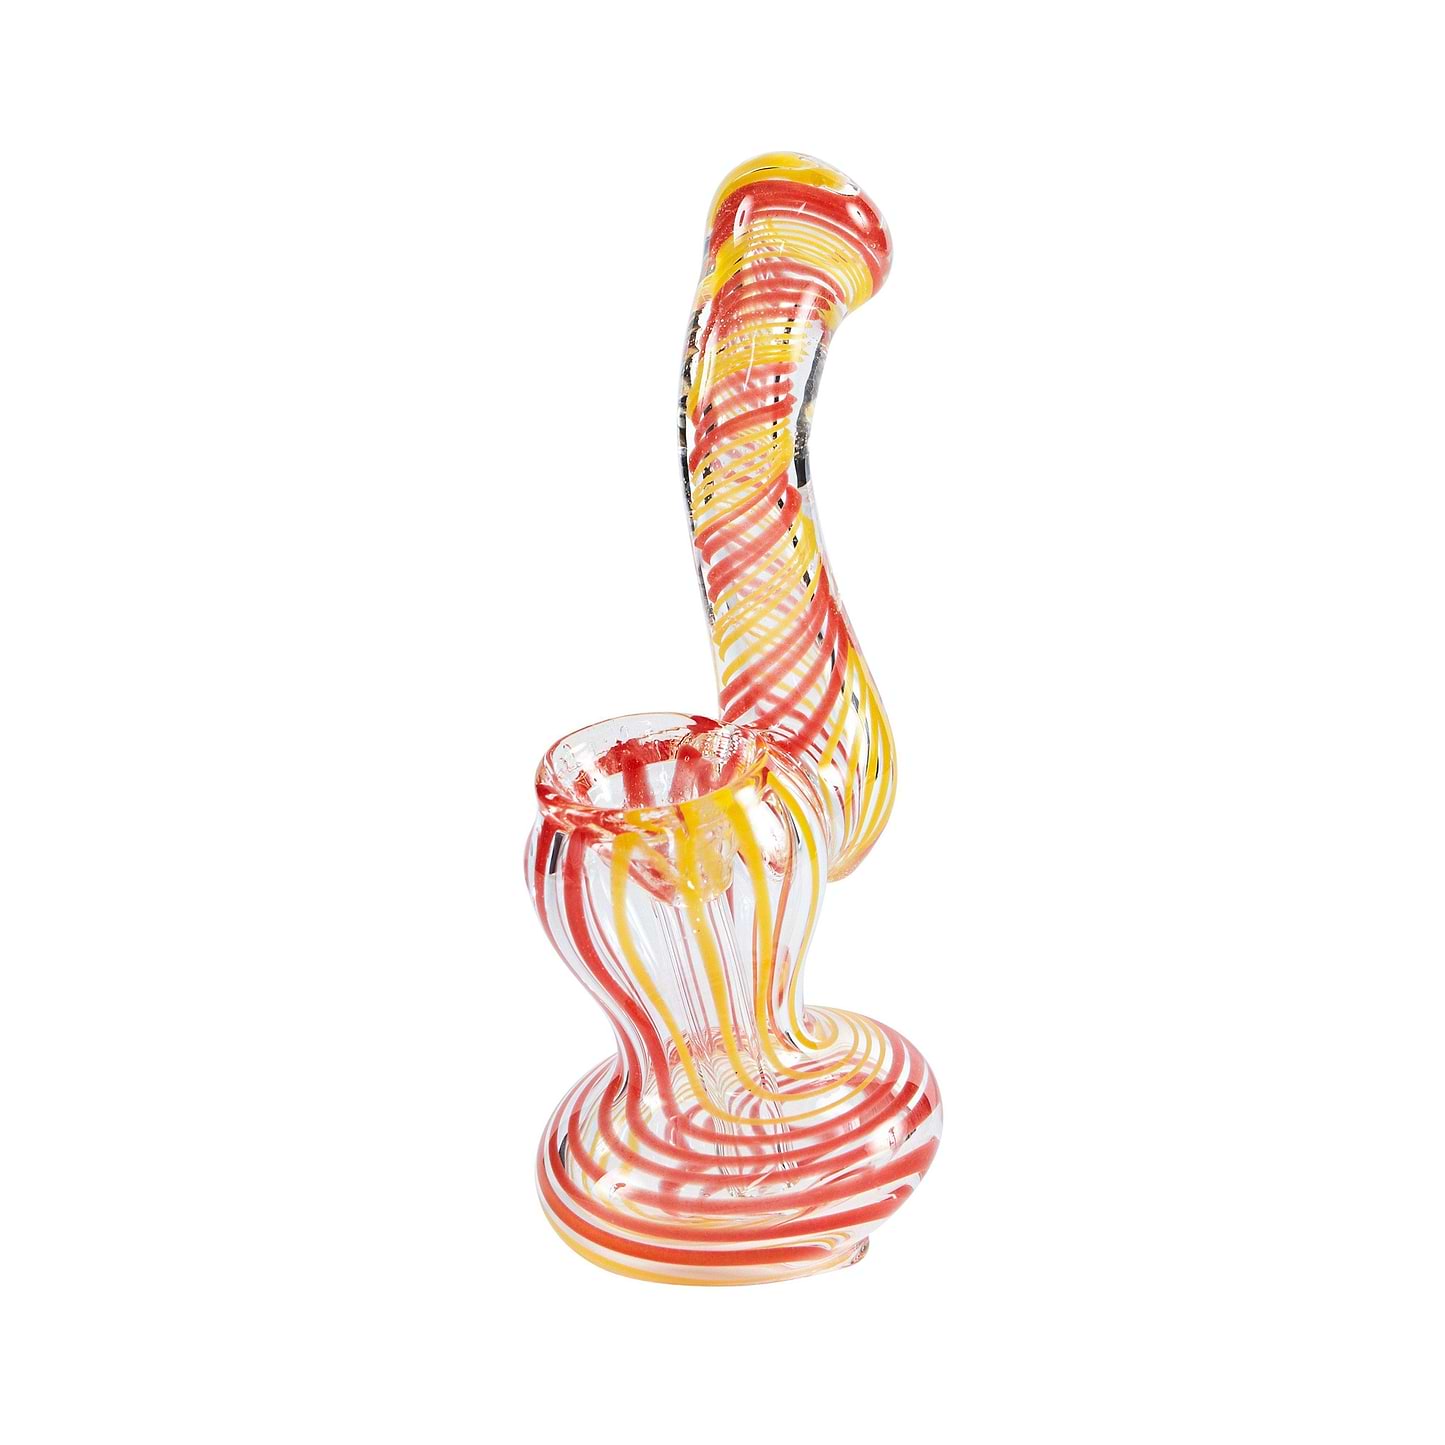 4-inch heat-safe mini glass classic bubbler bent neck Peaches and Cream swirl colors twisting design genie-in-a-bottle shape